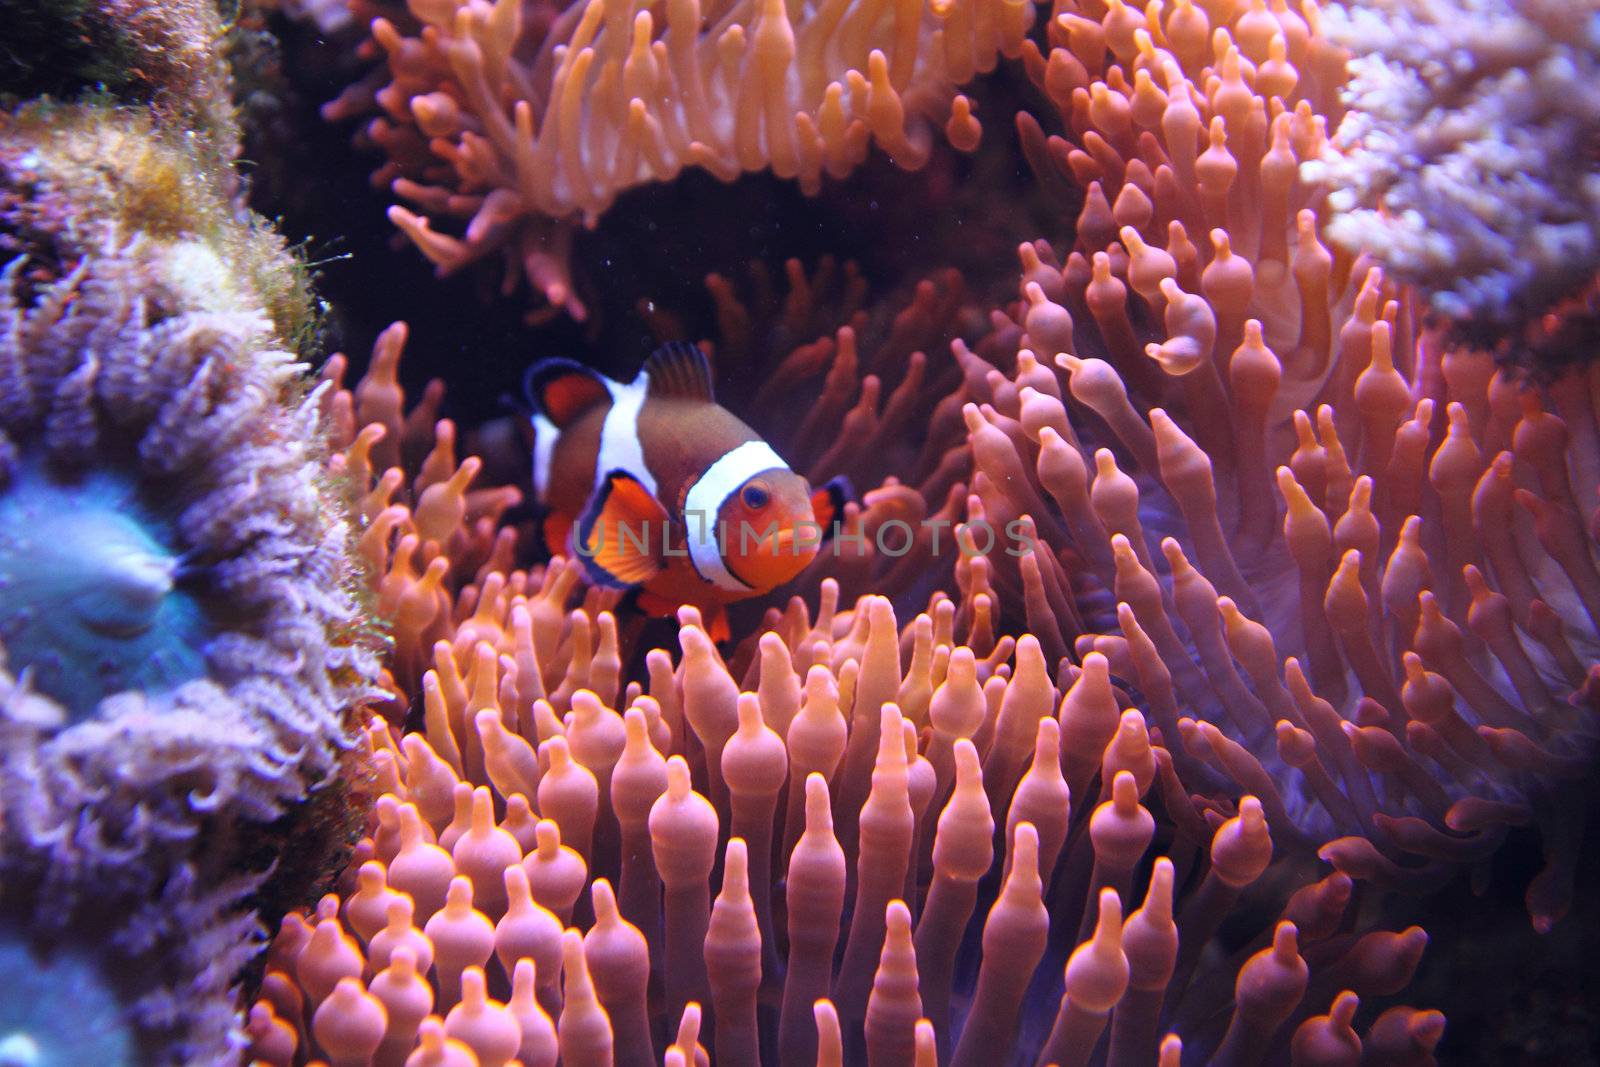 clown fish (nemo) by jonnysek